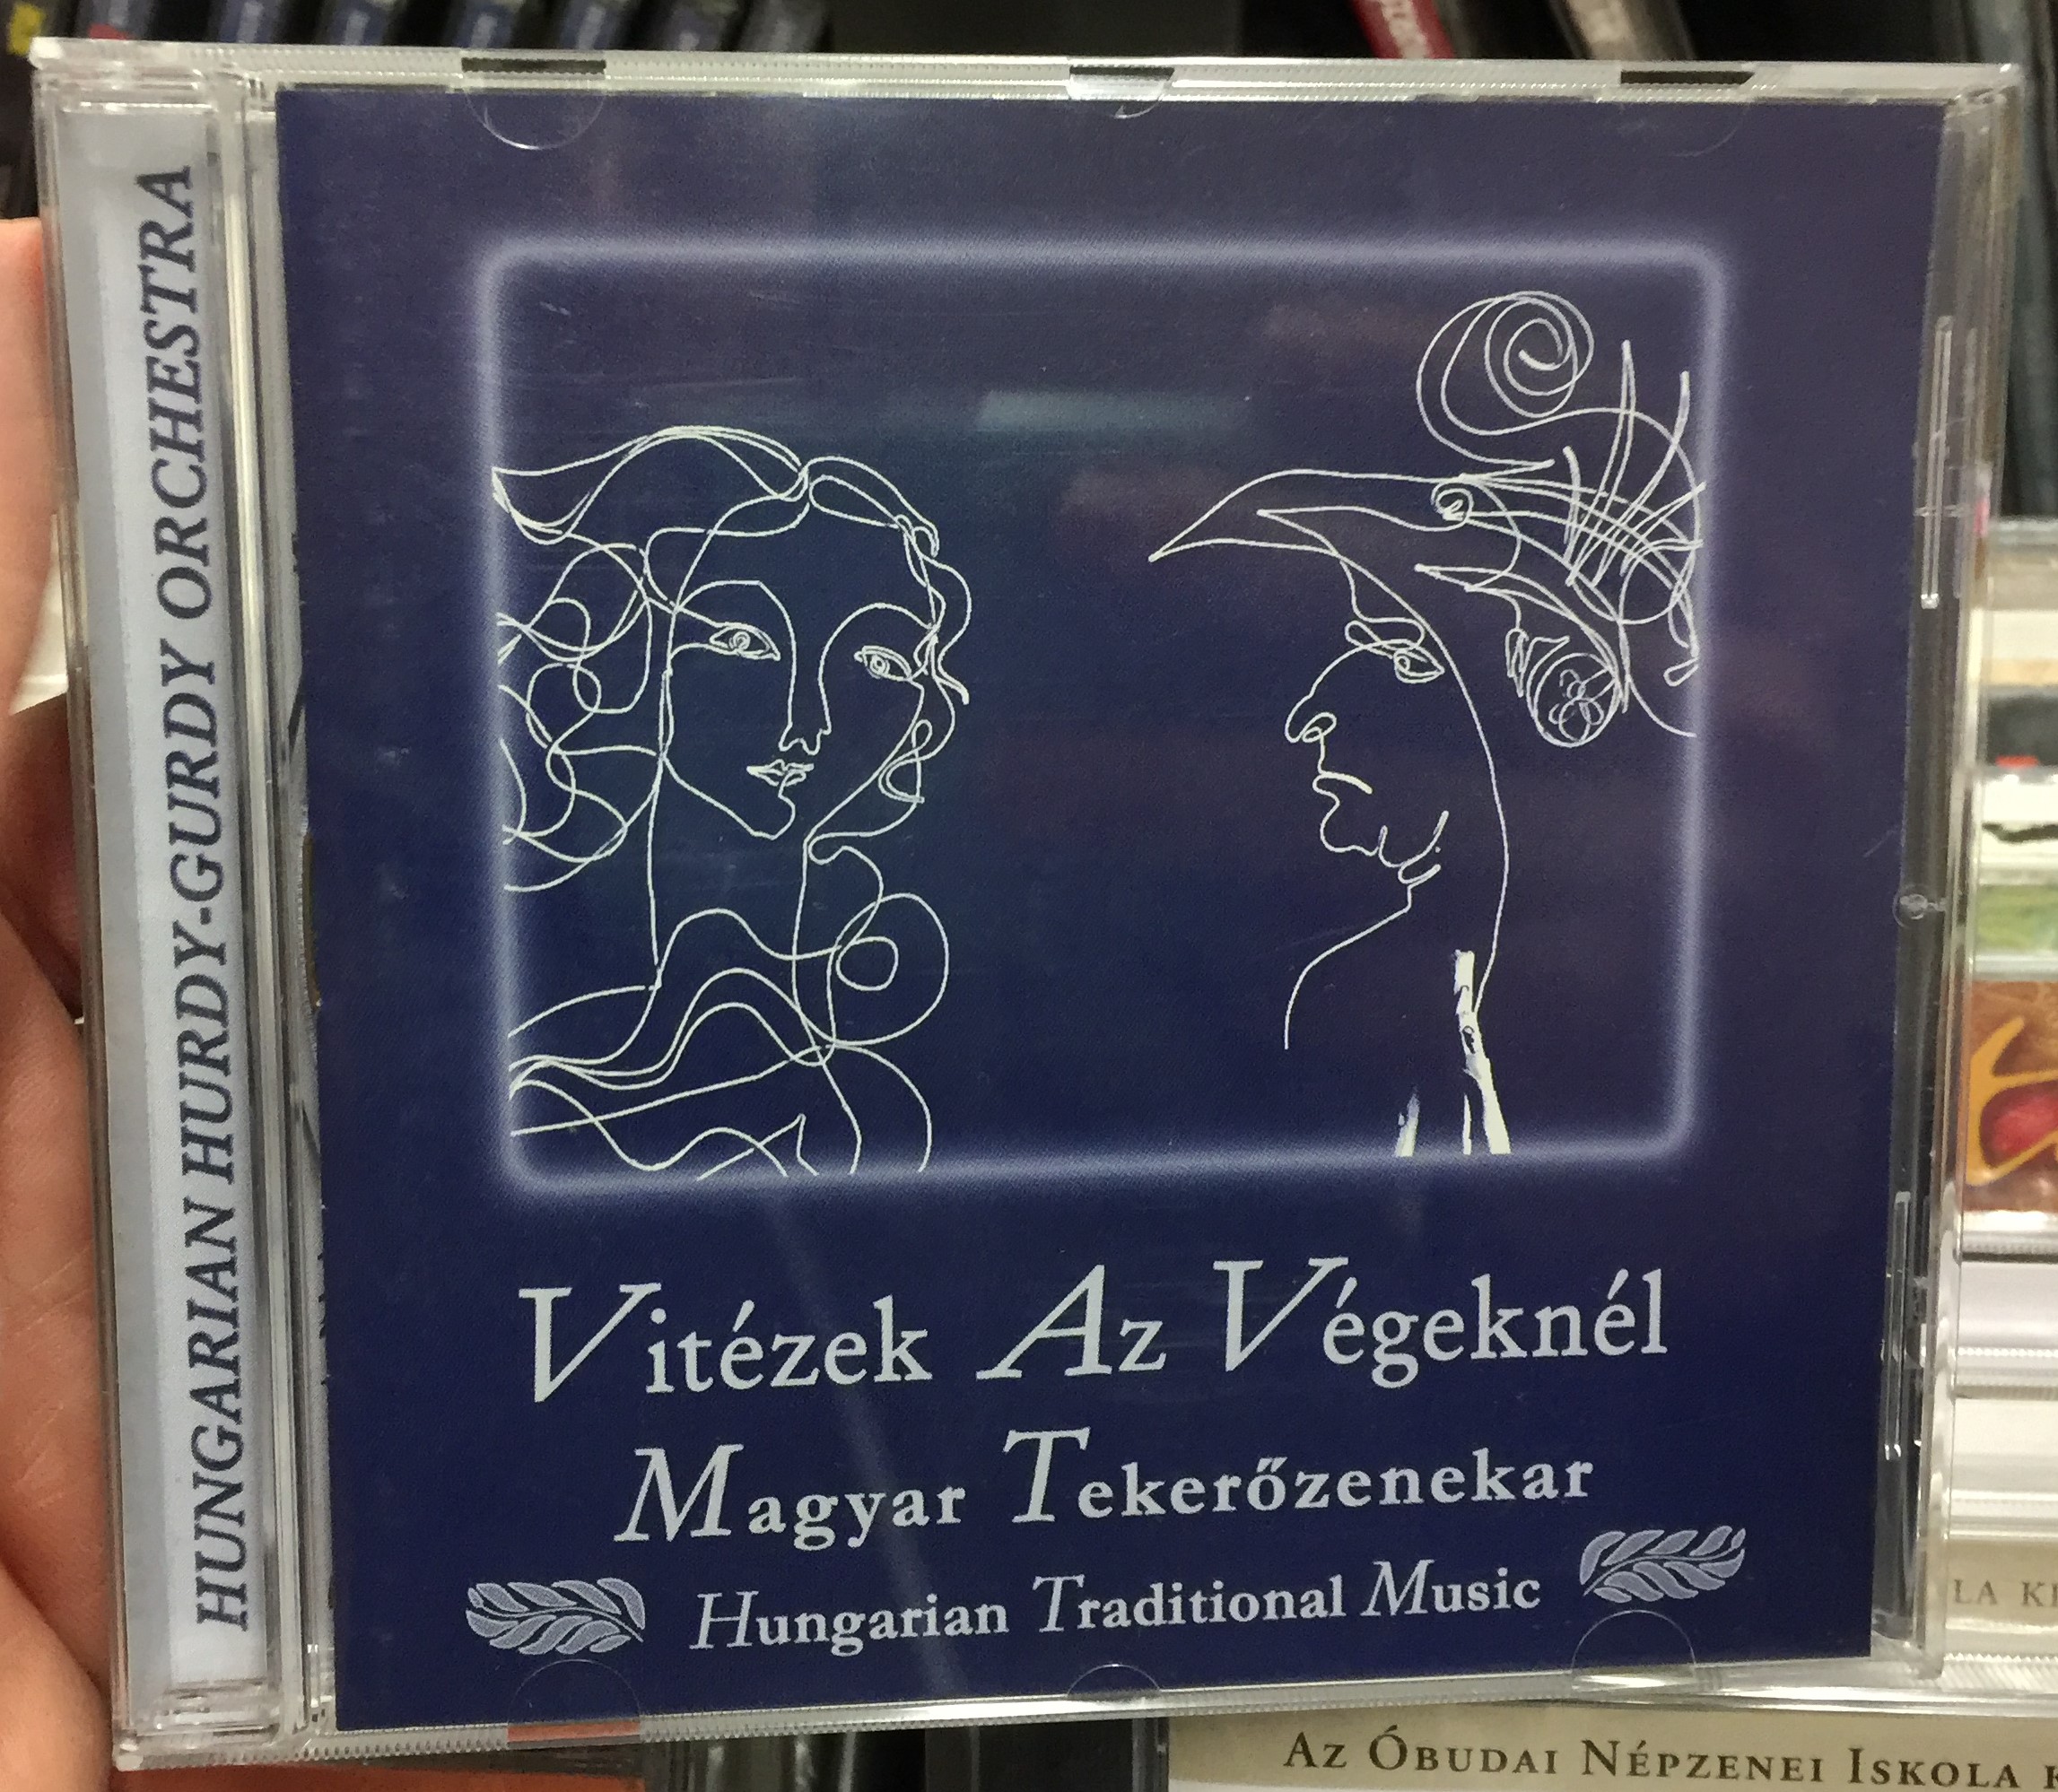 vit-zek-az-v-gekn-l-magyar-teker-zenekar-hungarian-traditional-music-periferic-records-audio-cd-5998272704274-1-.jpg